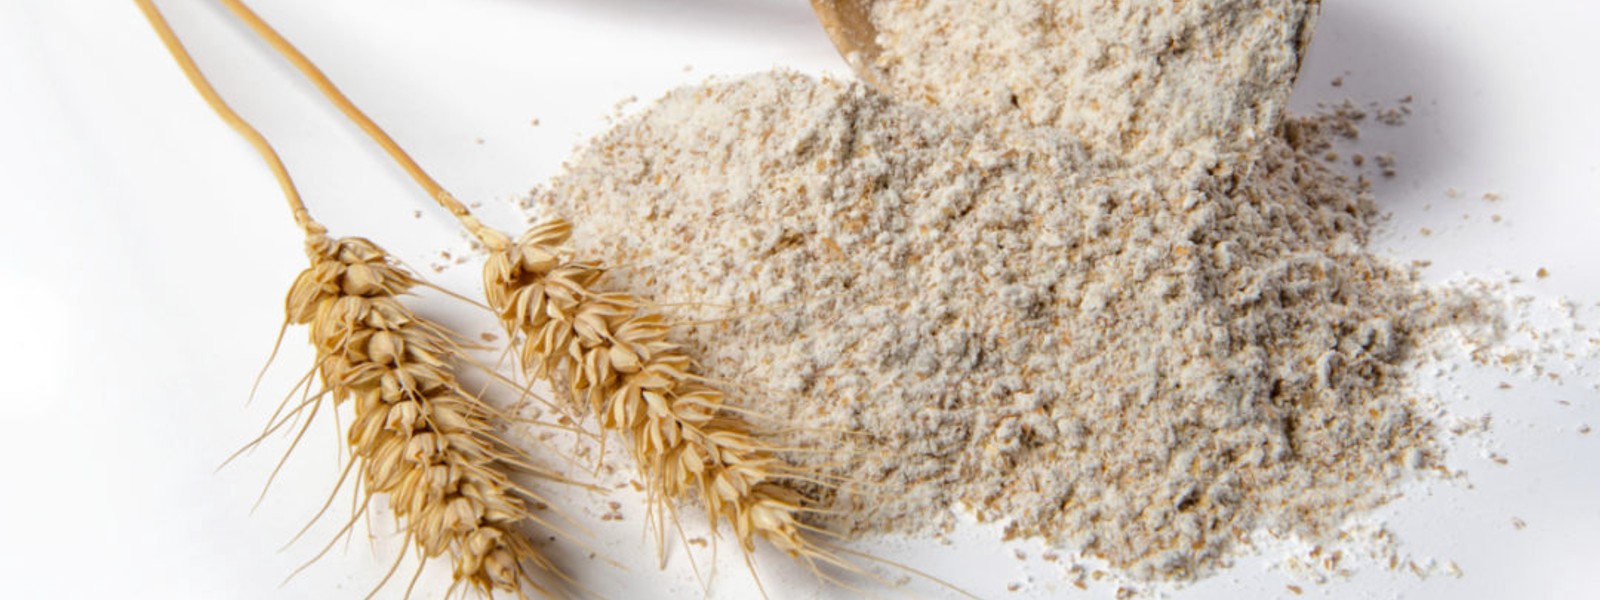 Wheat Flour prices increased